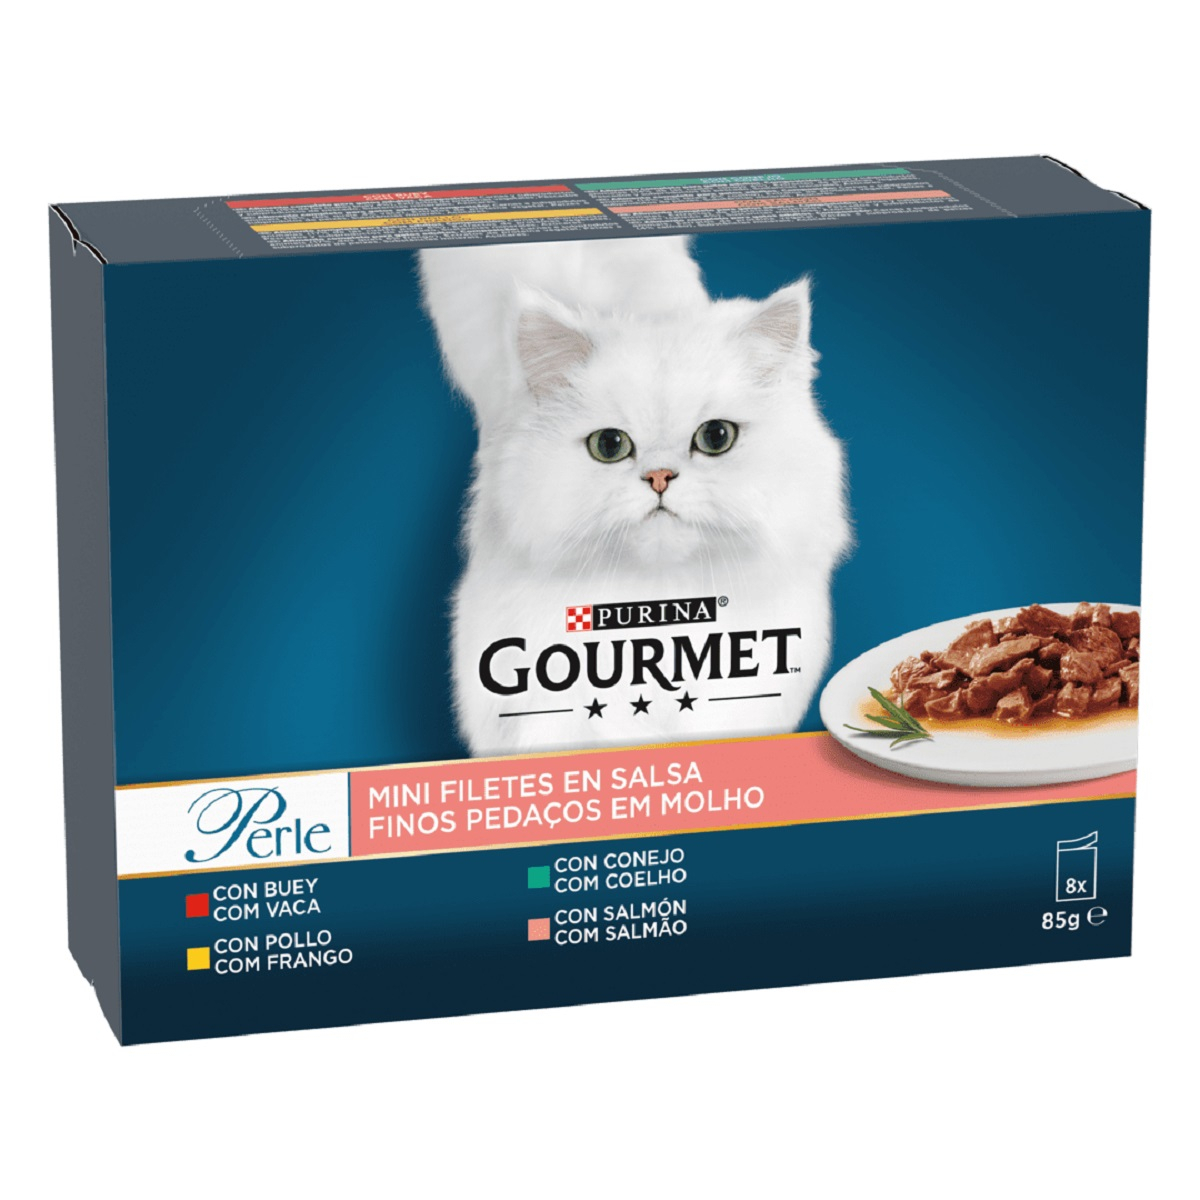 GOURMET Perle Mini Filetes en salsa para gatos - PACK de 8x85g